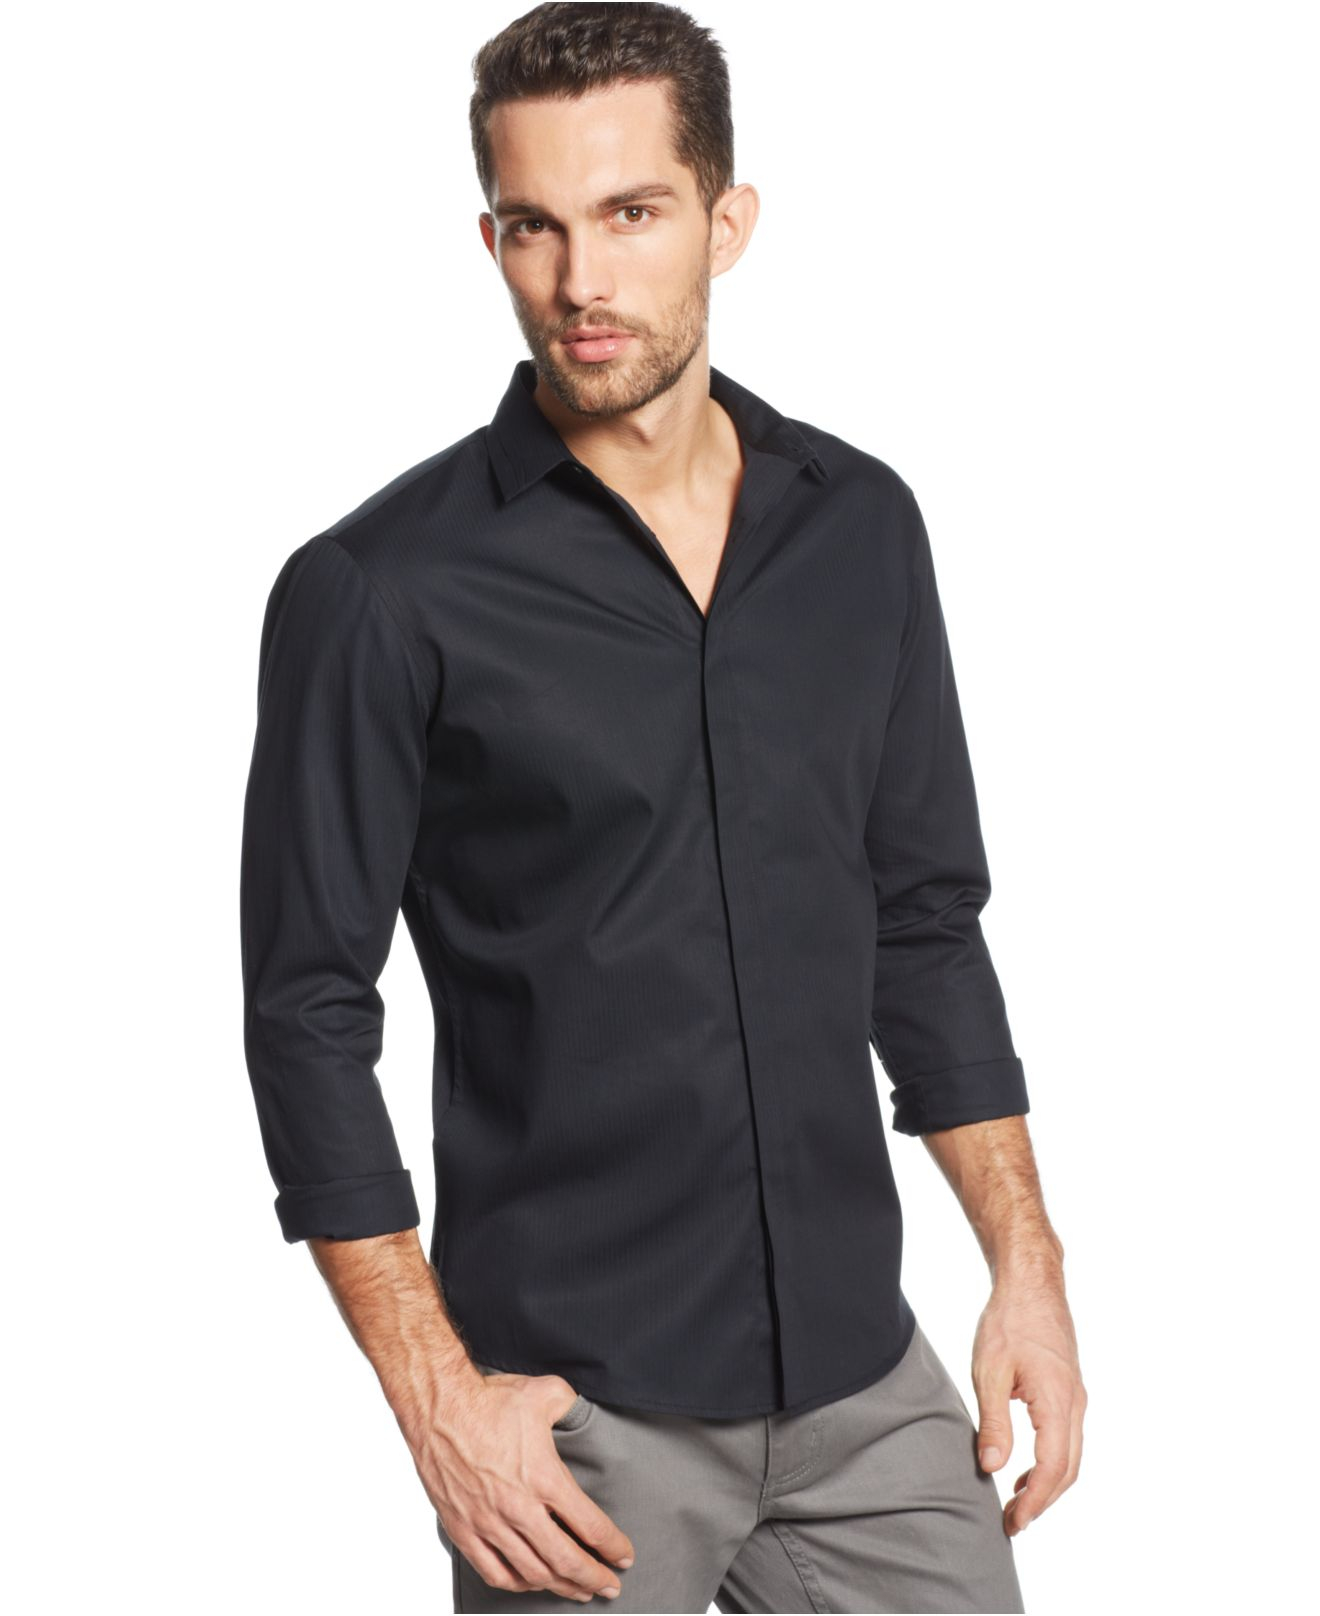 Lyst - Inc International Concepts Lucas Shirt in Black for Men